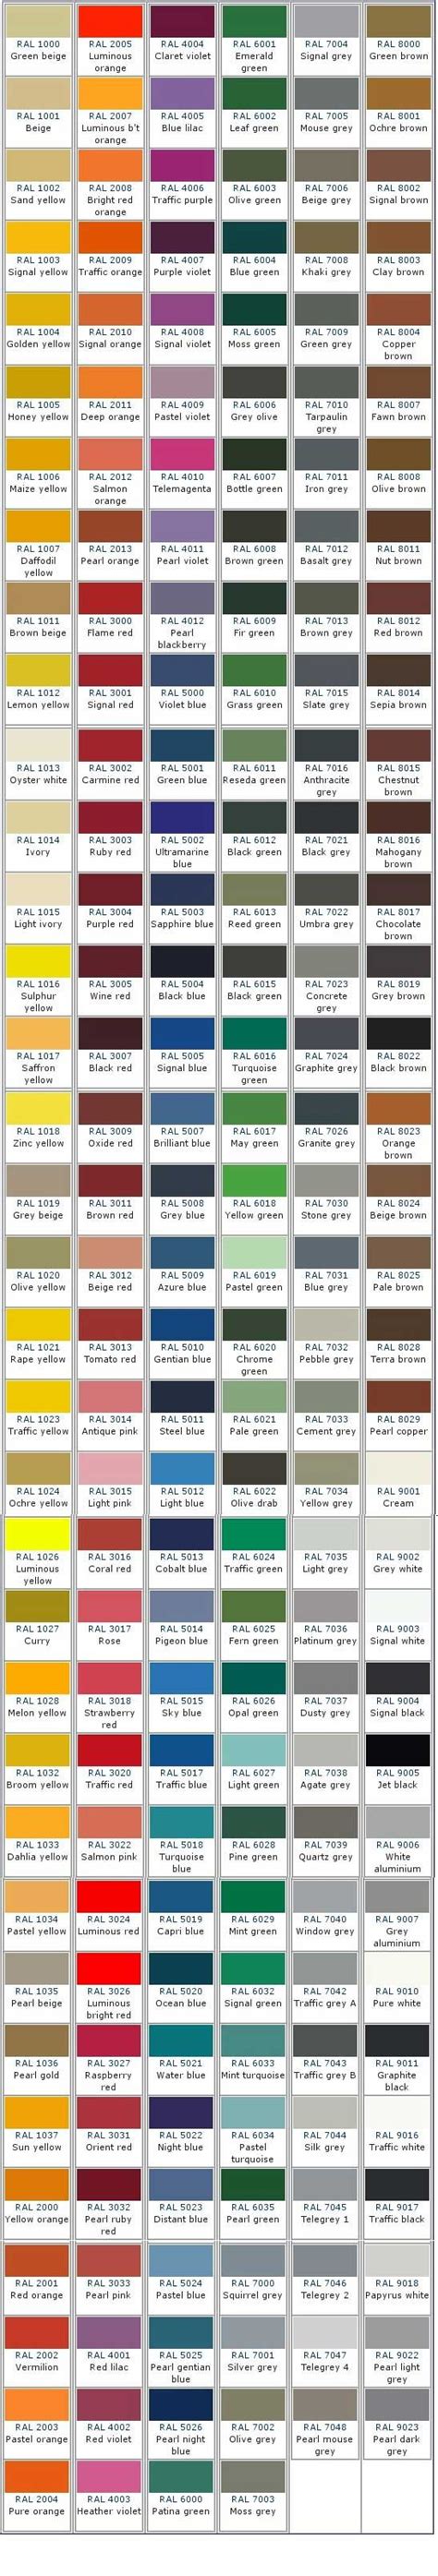 Ral Classic Colour Chart Glass Kitchen Ral Colour Chart Kitchen Planner